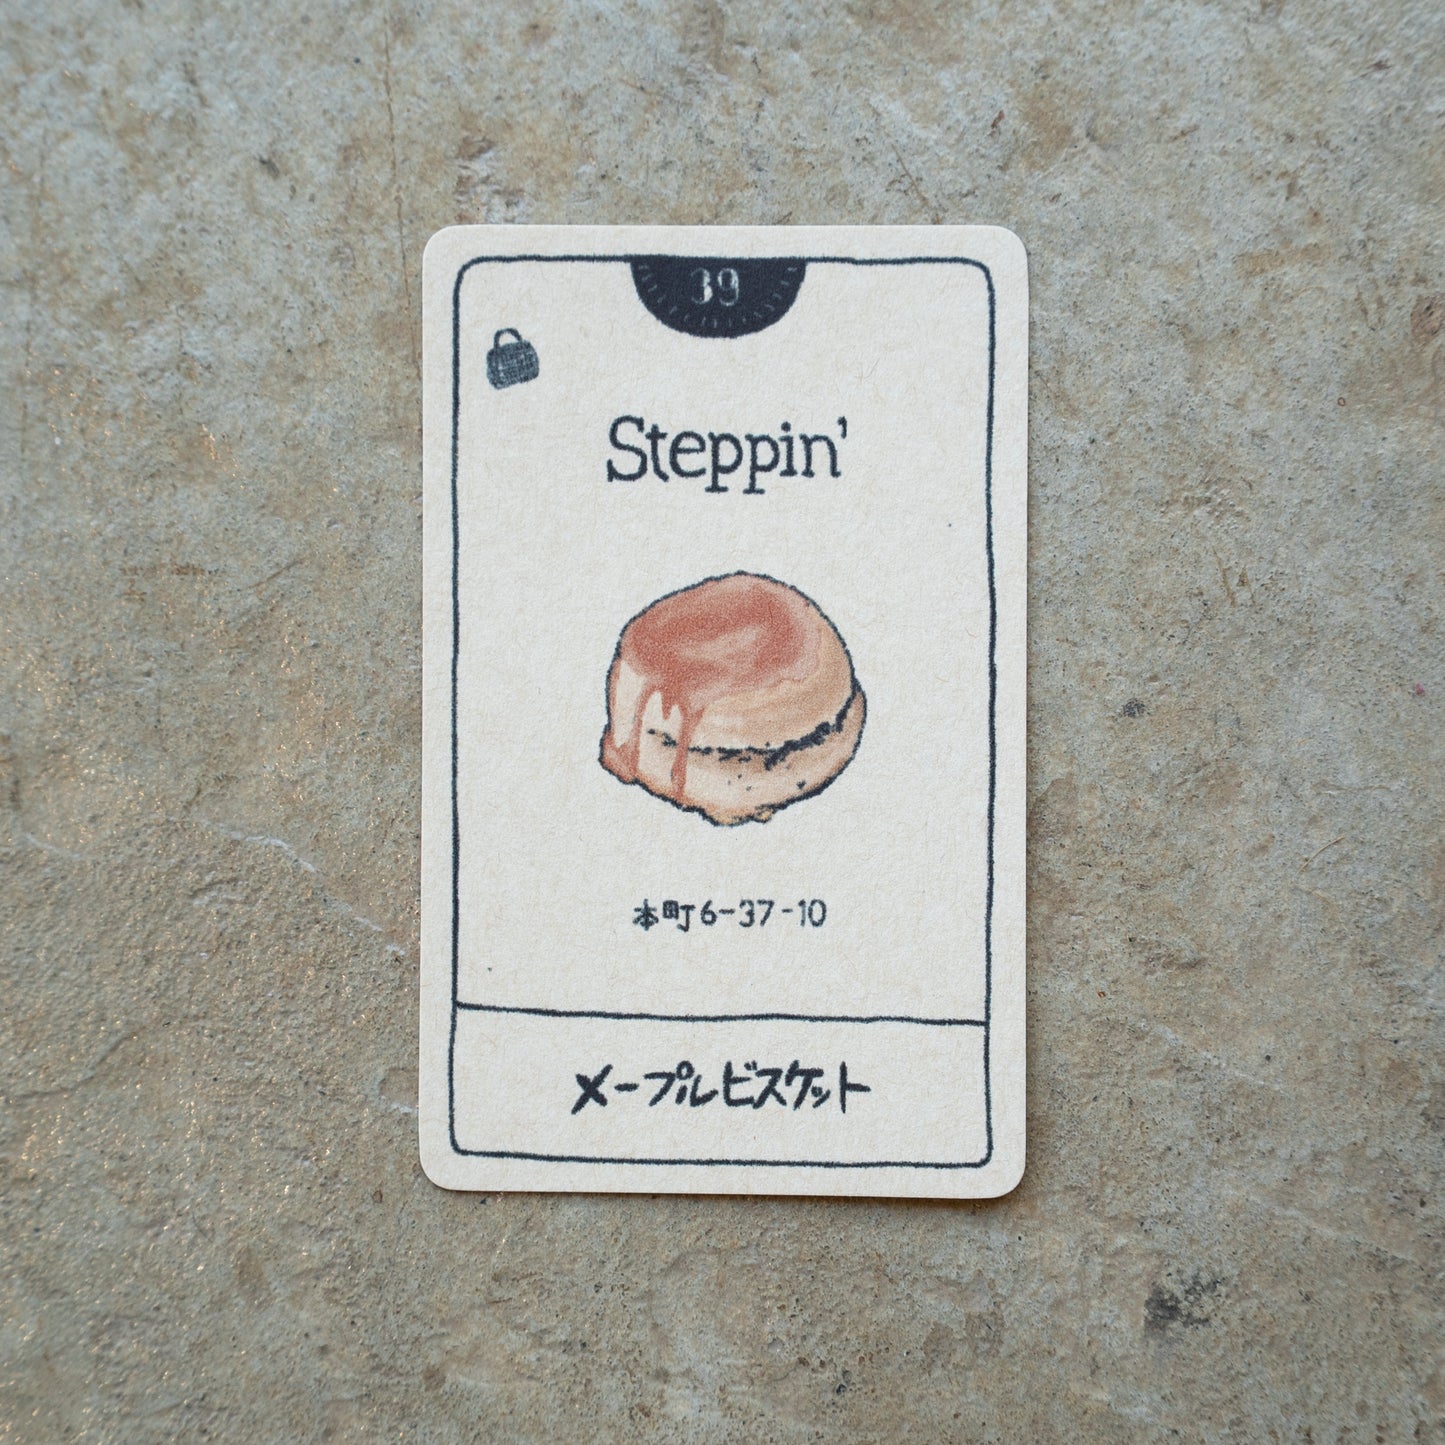 Steppin' メープルビスケット | KITASHIBU FOOD TAROT 039